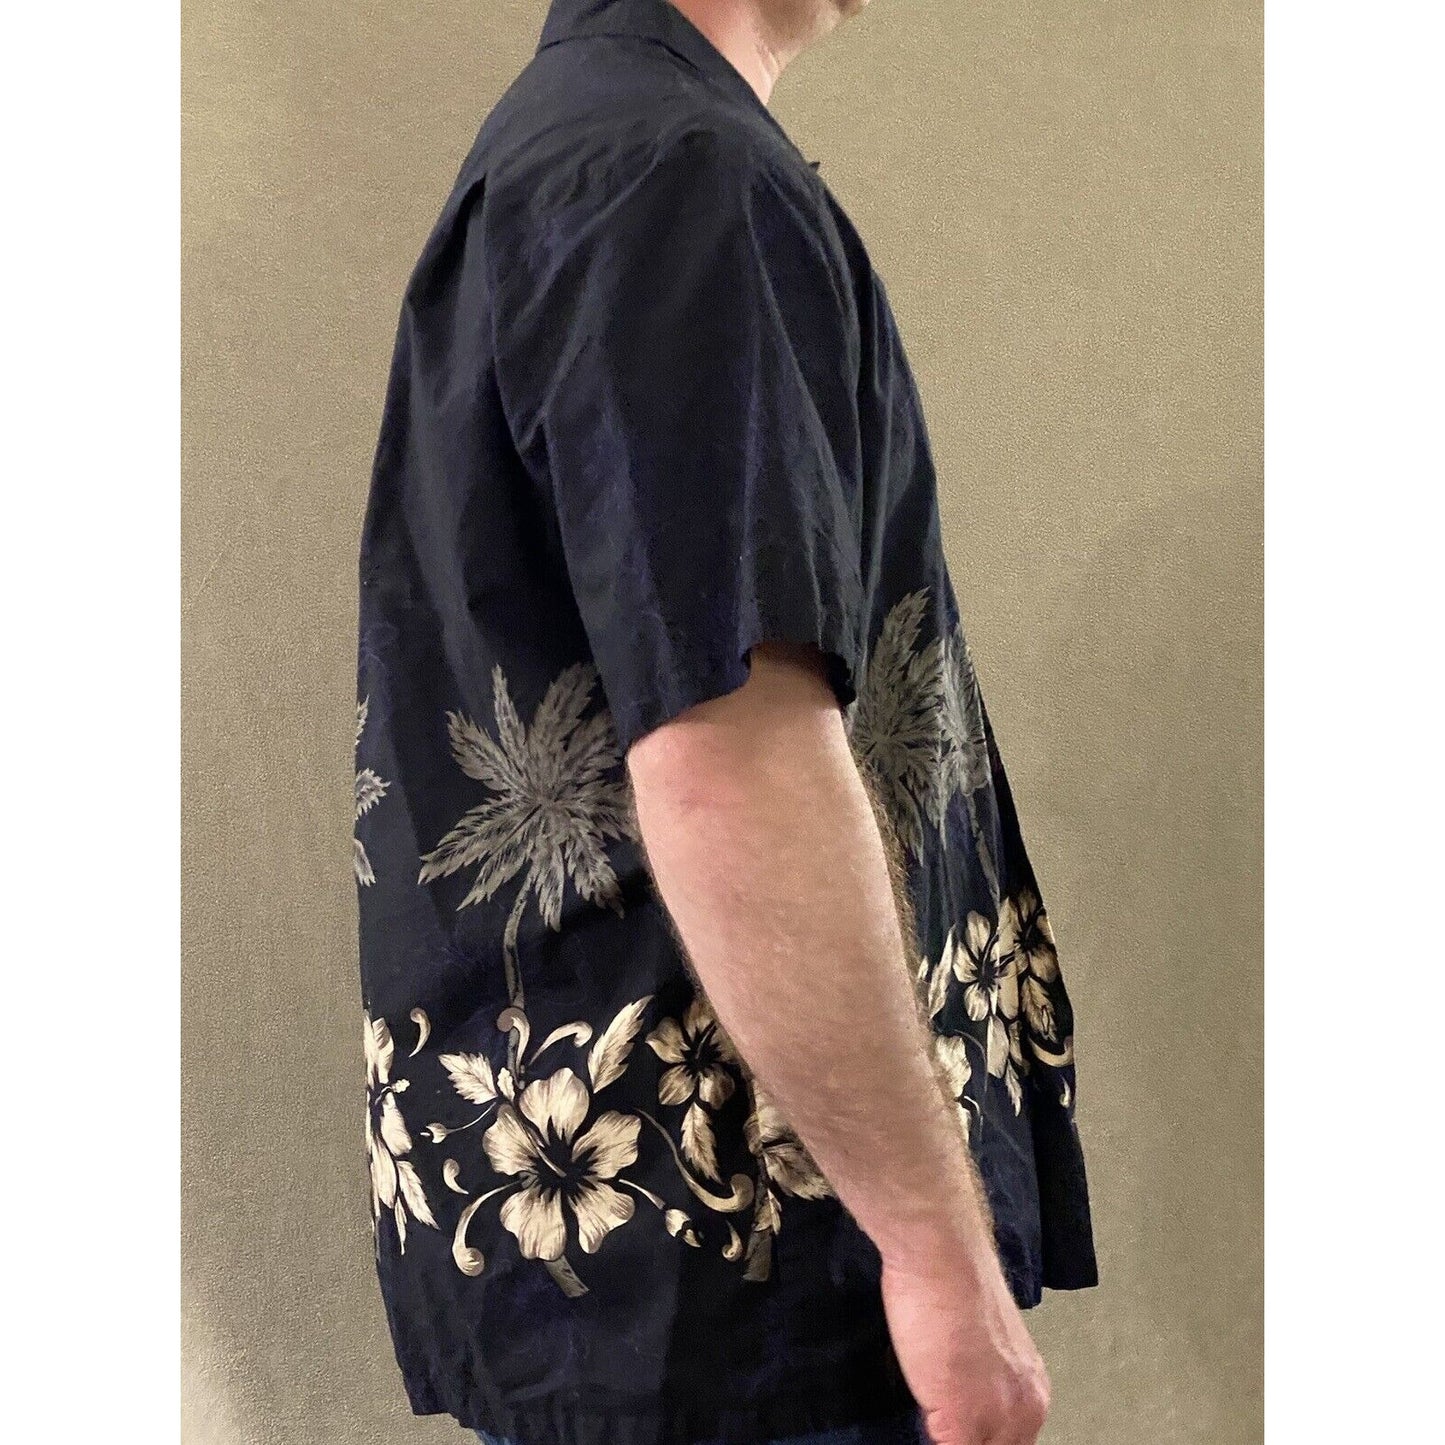 RJC Men’s XL Black Hawaiian Summer Palm Trees Hibiscus Flowers Button-down Shirt